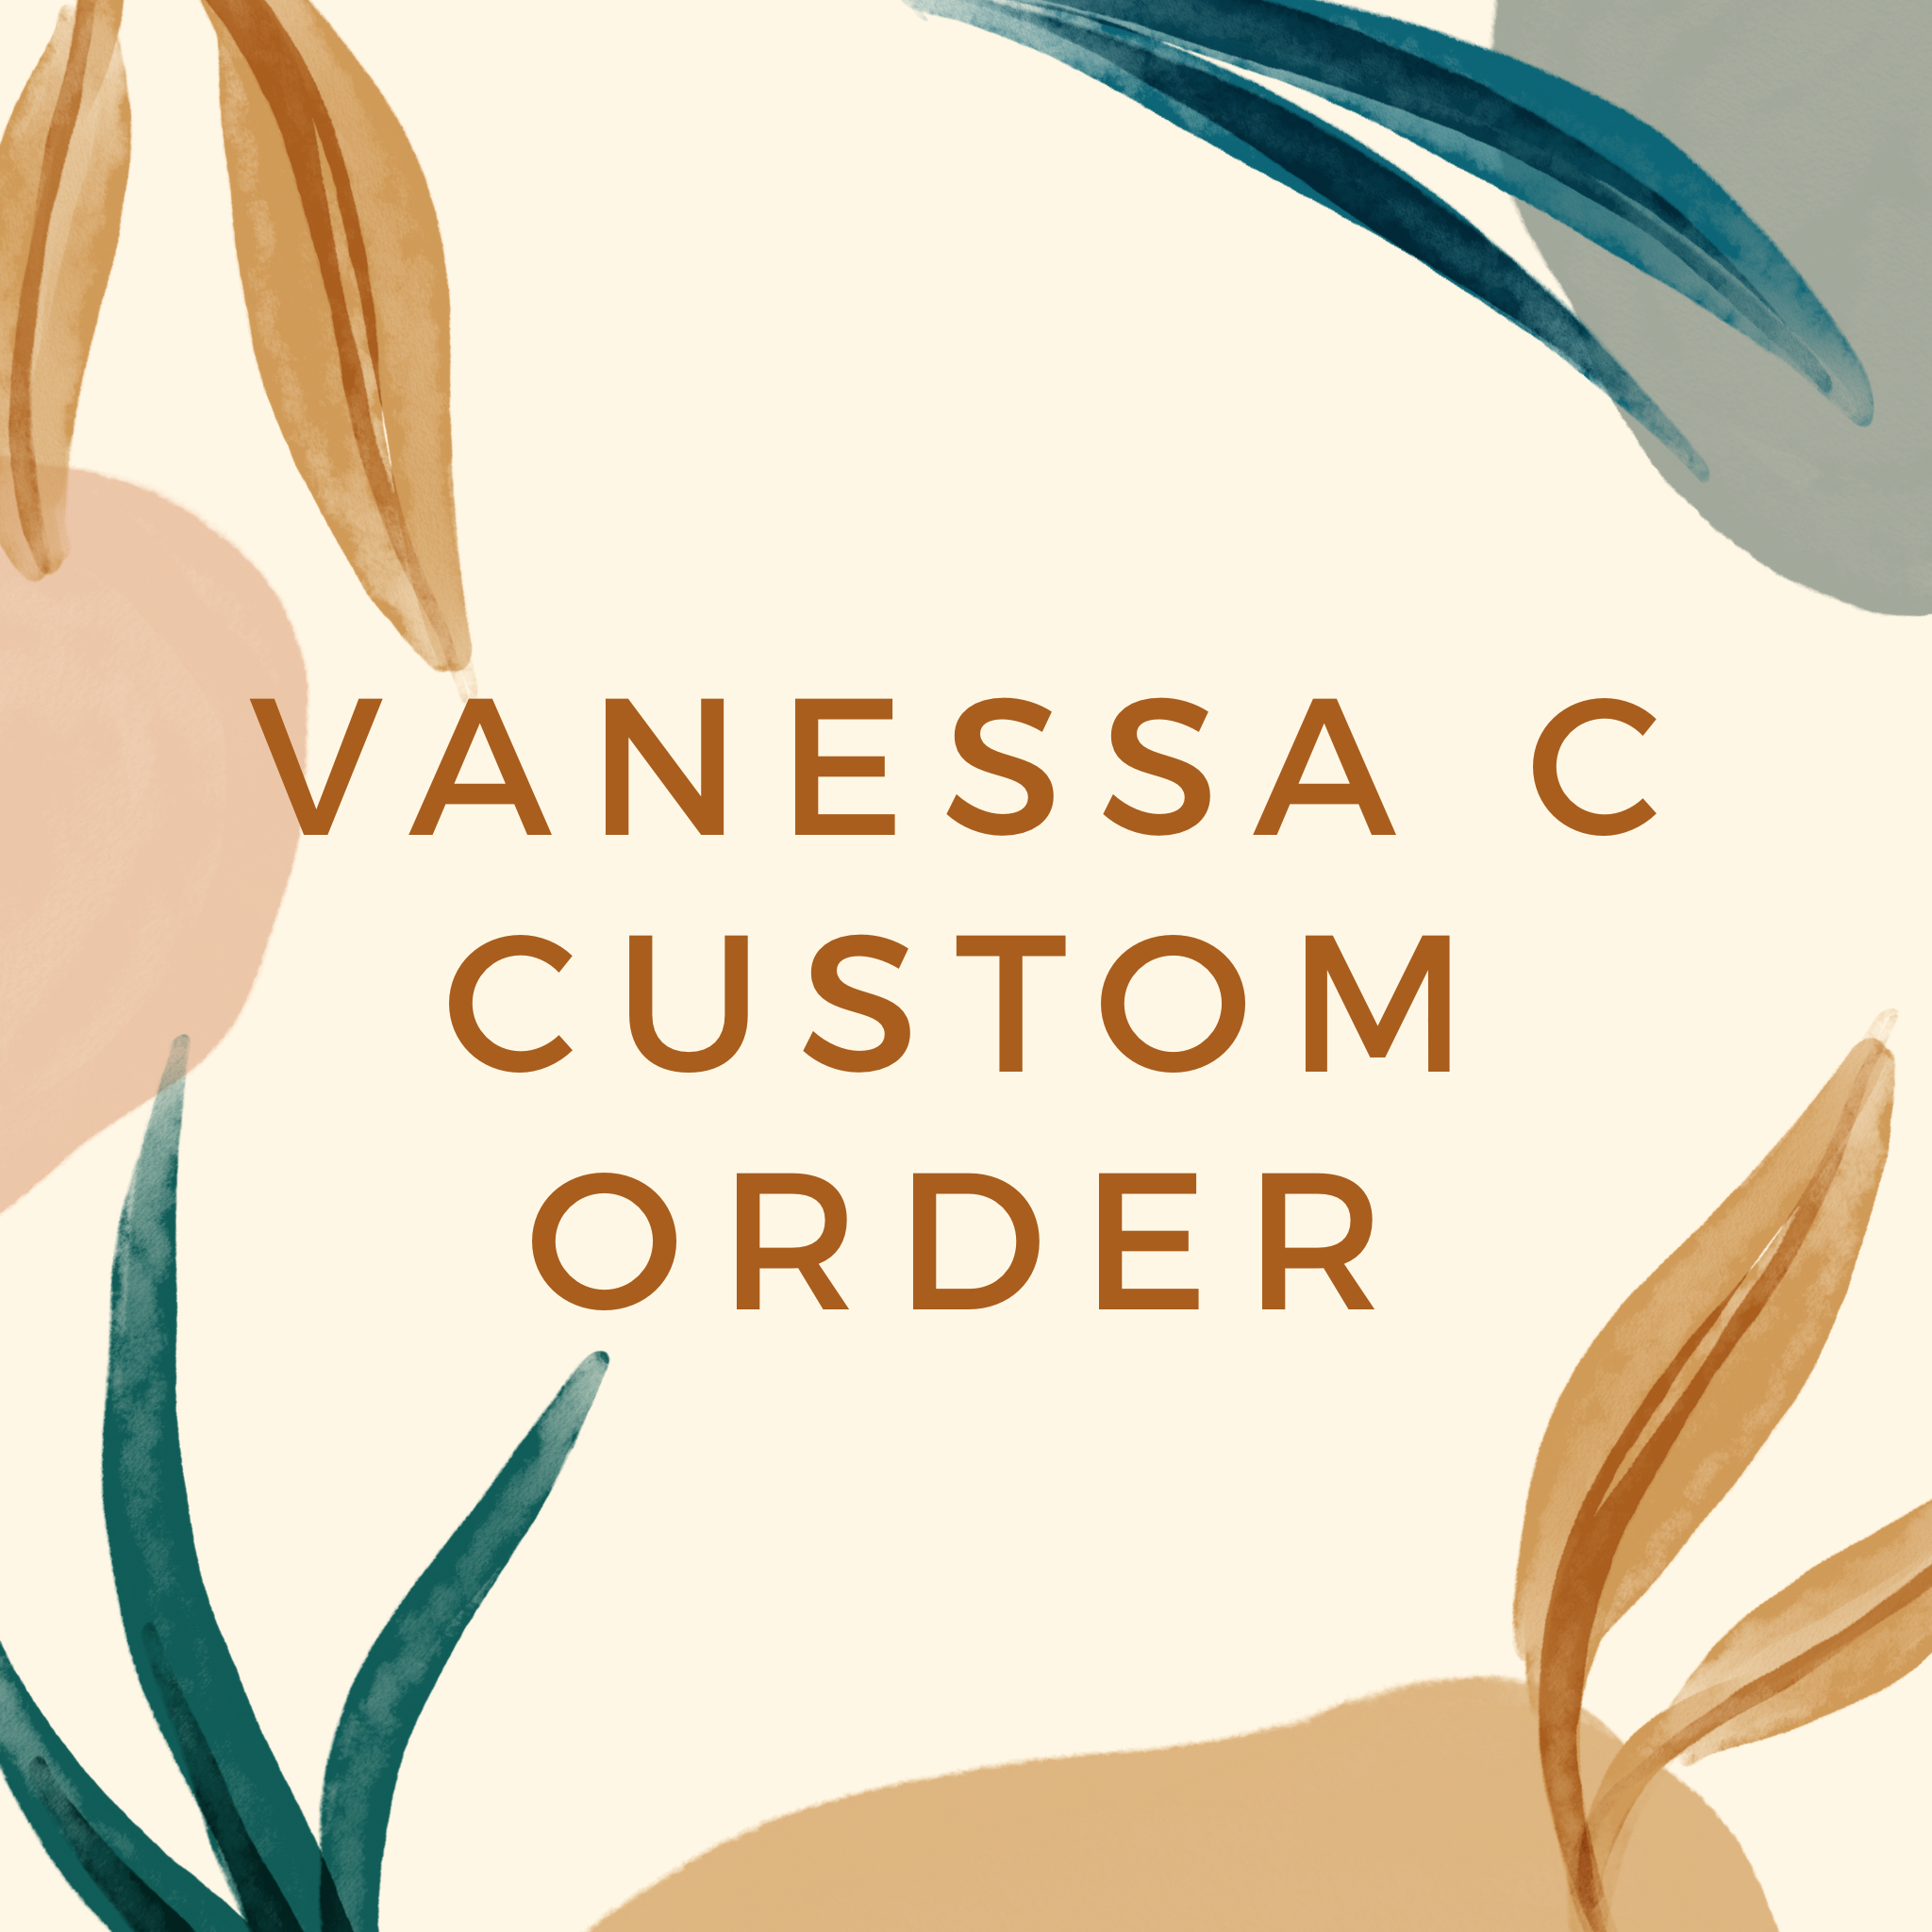 Vanessa C Custom Order